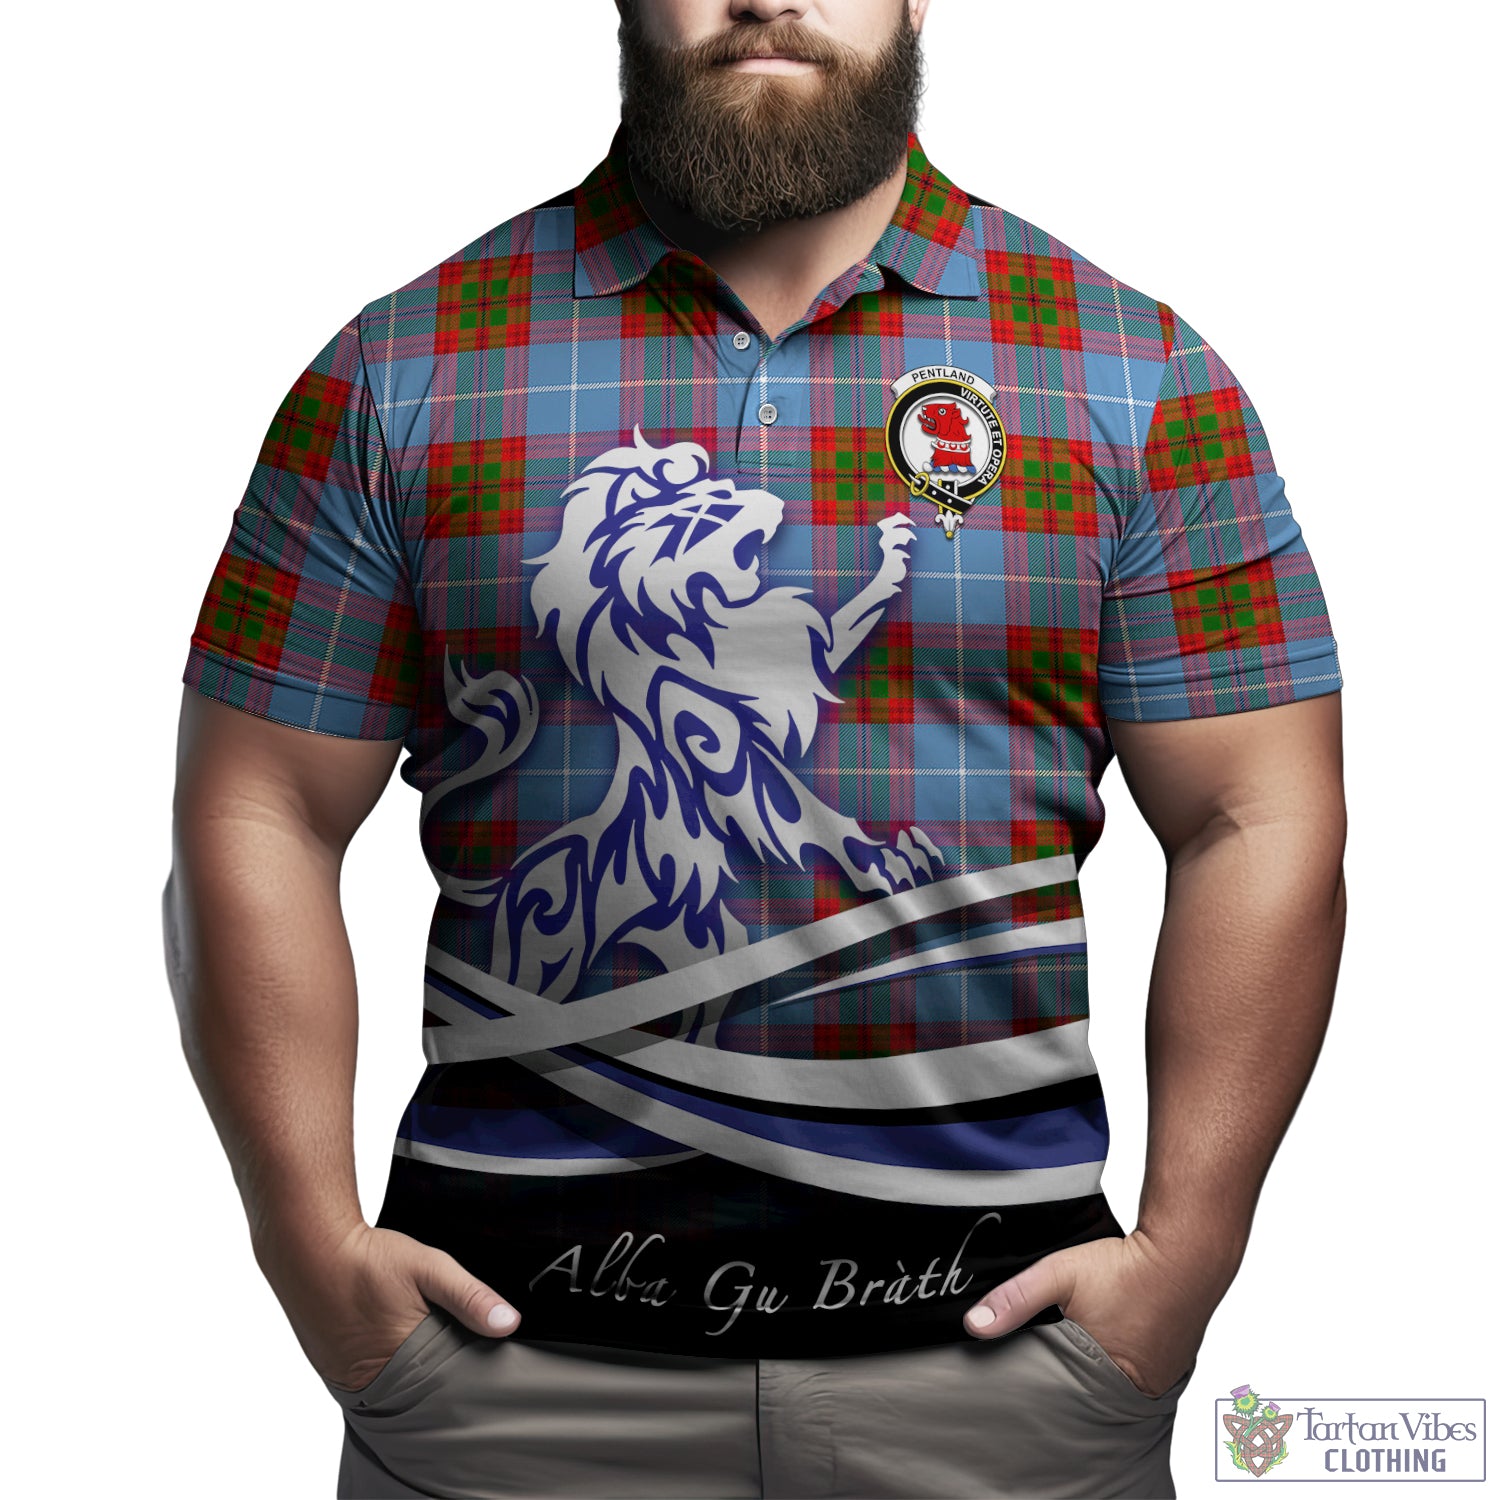 pentland-tartan-polo-shirt-with-alba-gu-brath-regal-lion-emblem